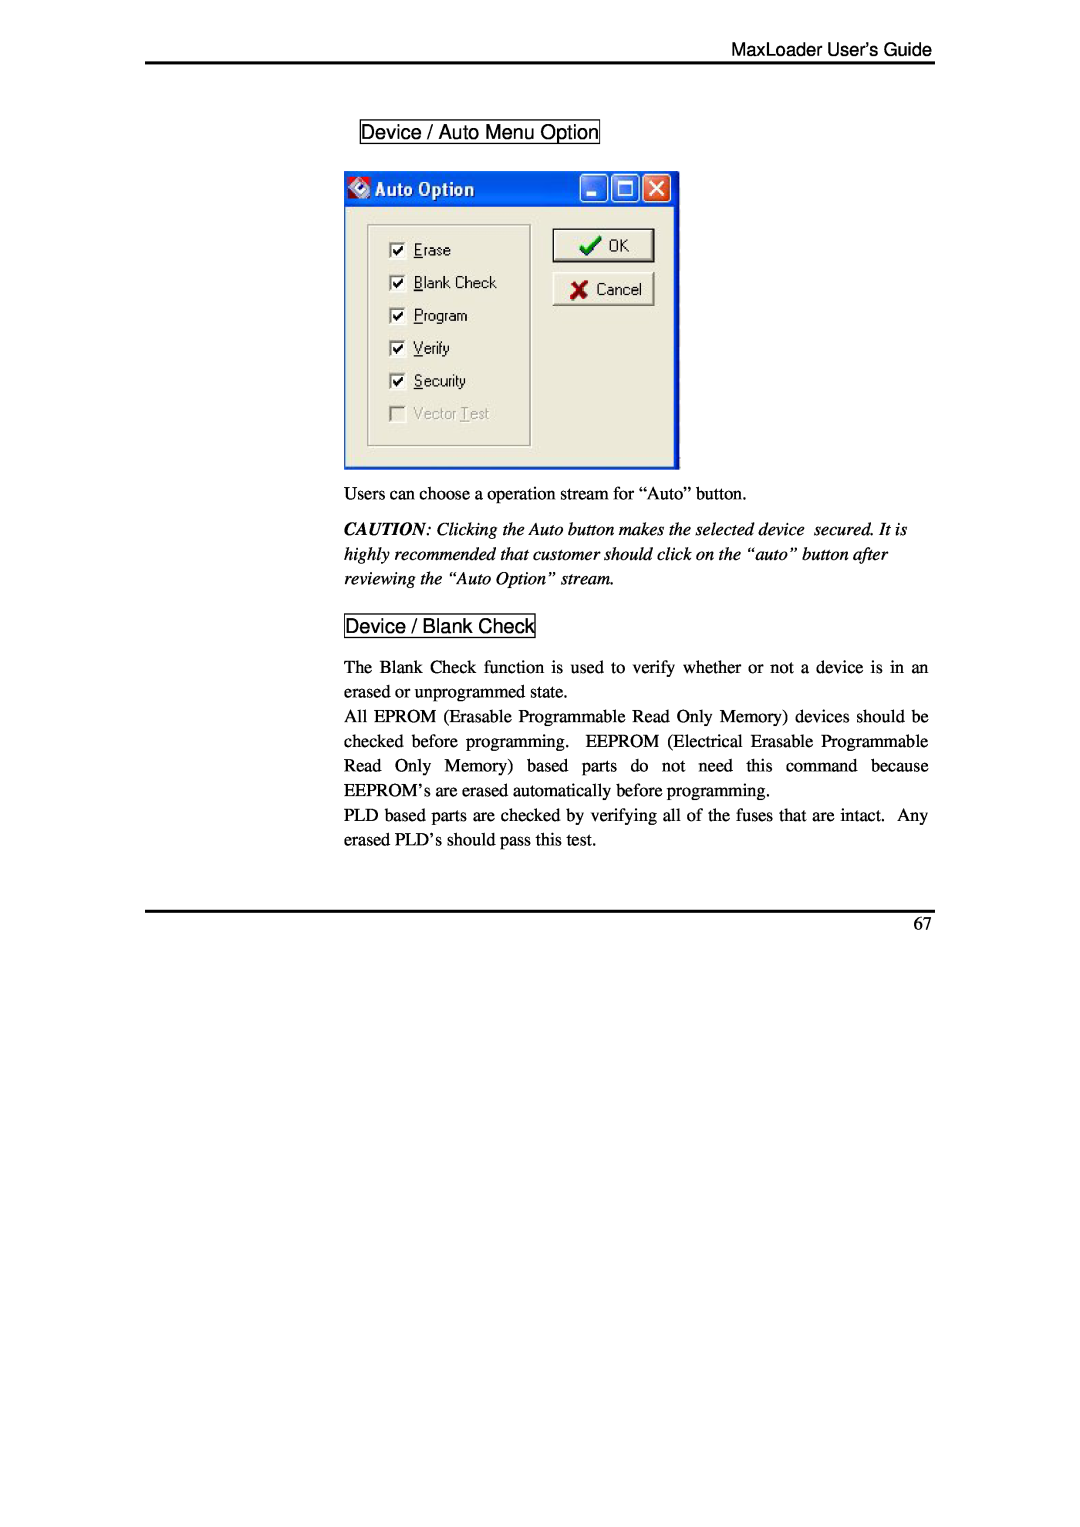 IBM MaxLoader manual Device / Auto Menu Option, Device / Blank Check 